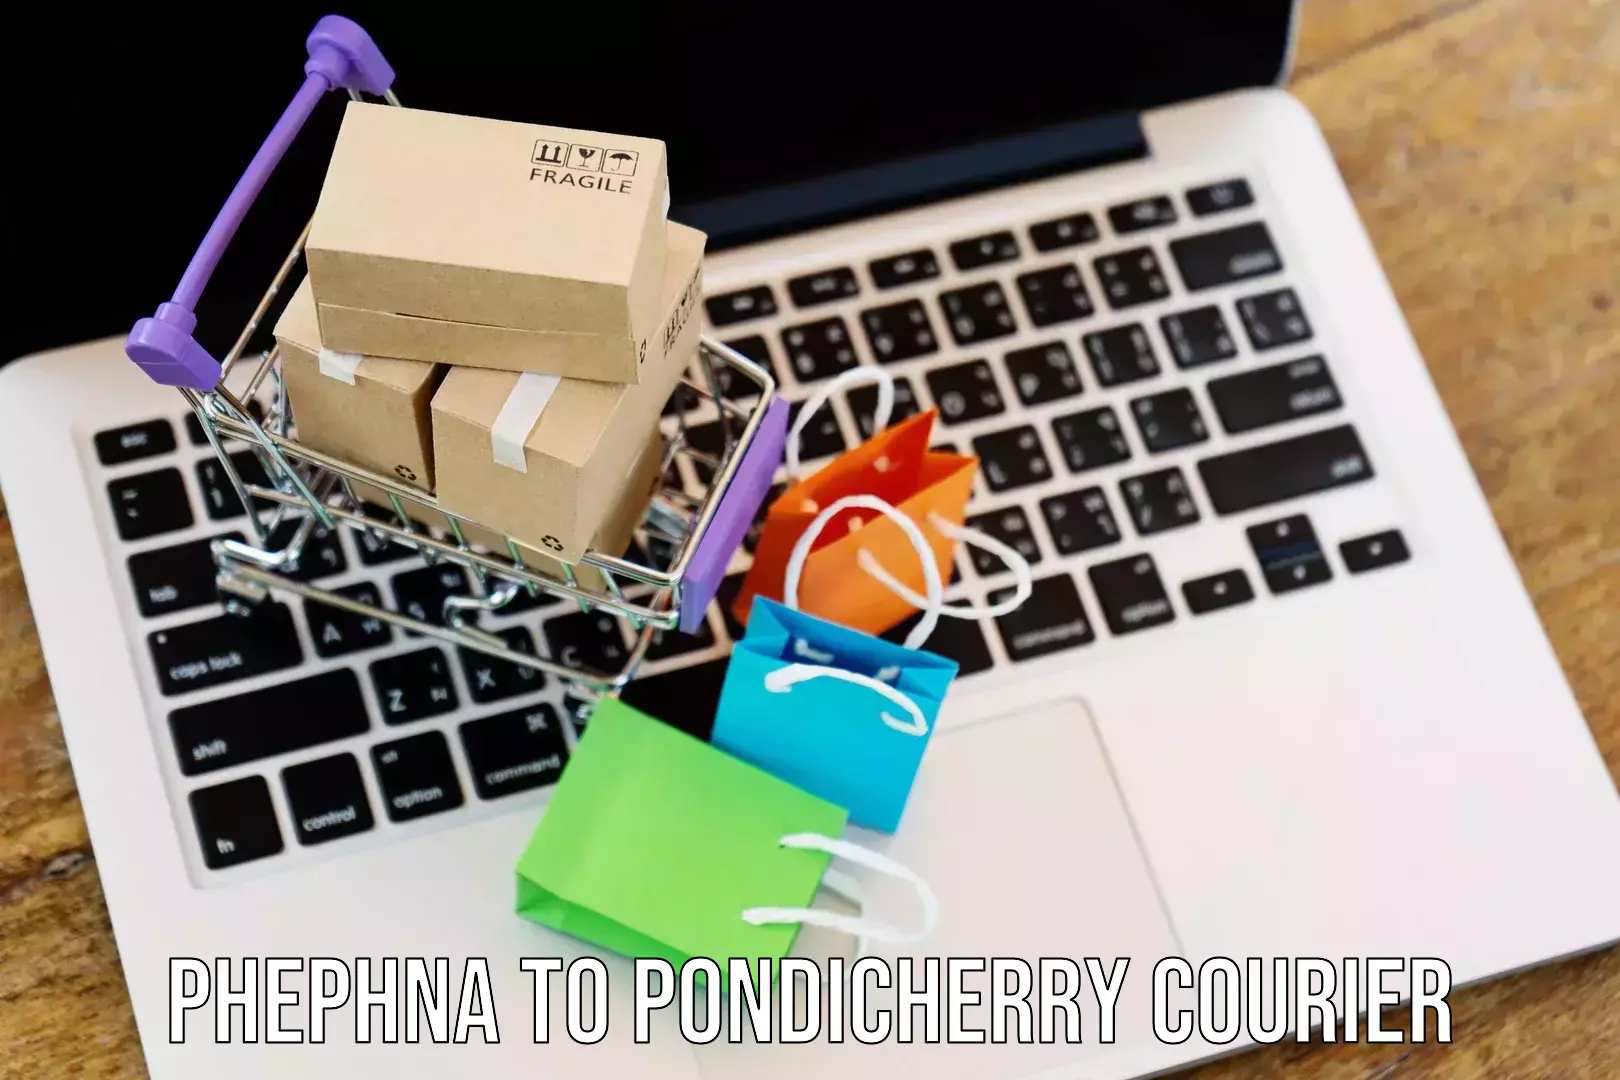 Global courier networks Phephna to Pondicherry University